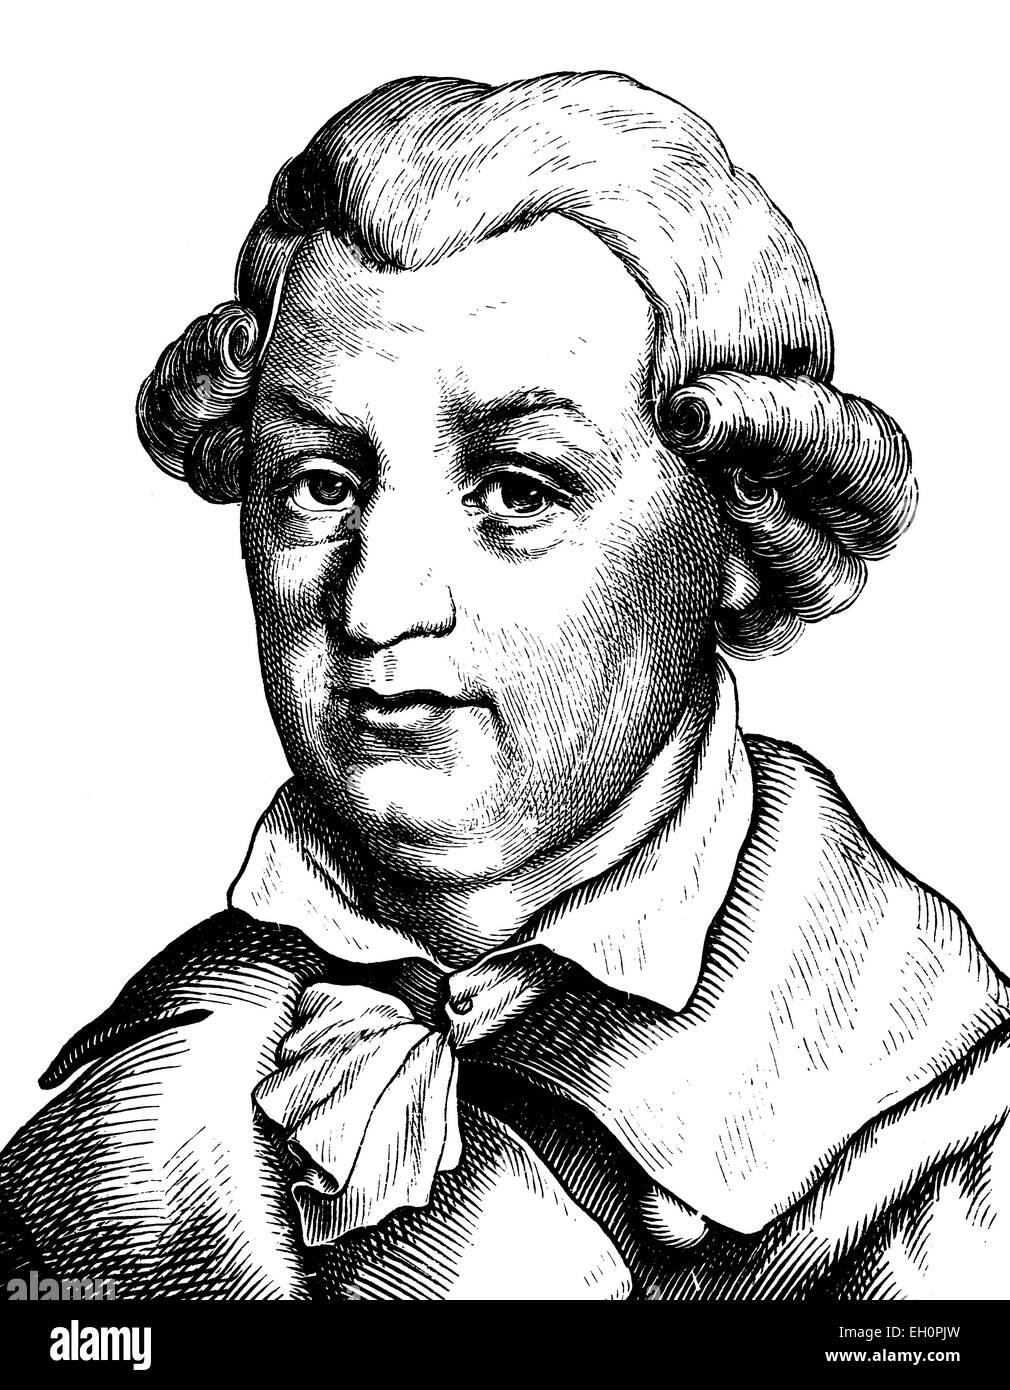 Digital improved image of Johann Karl August Musaeus, 1735 - 1787, portrait, historic illustration, 1880 Stock Photo